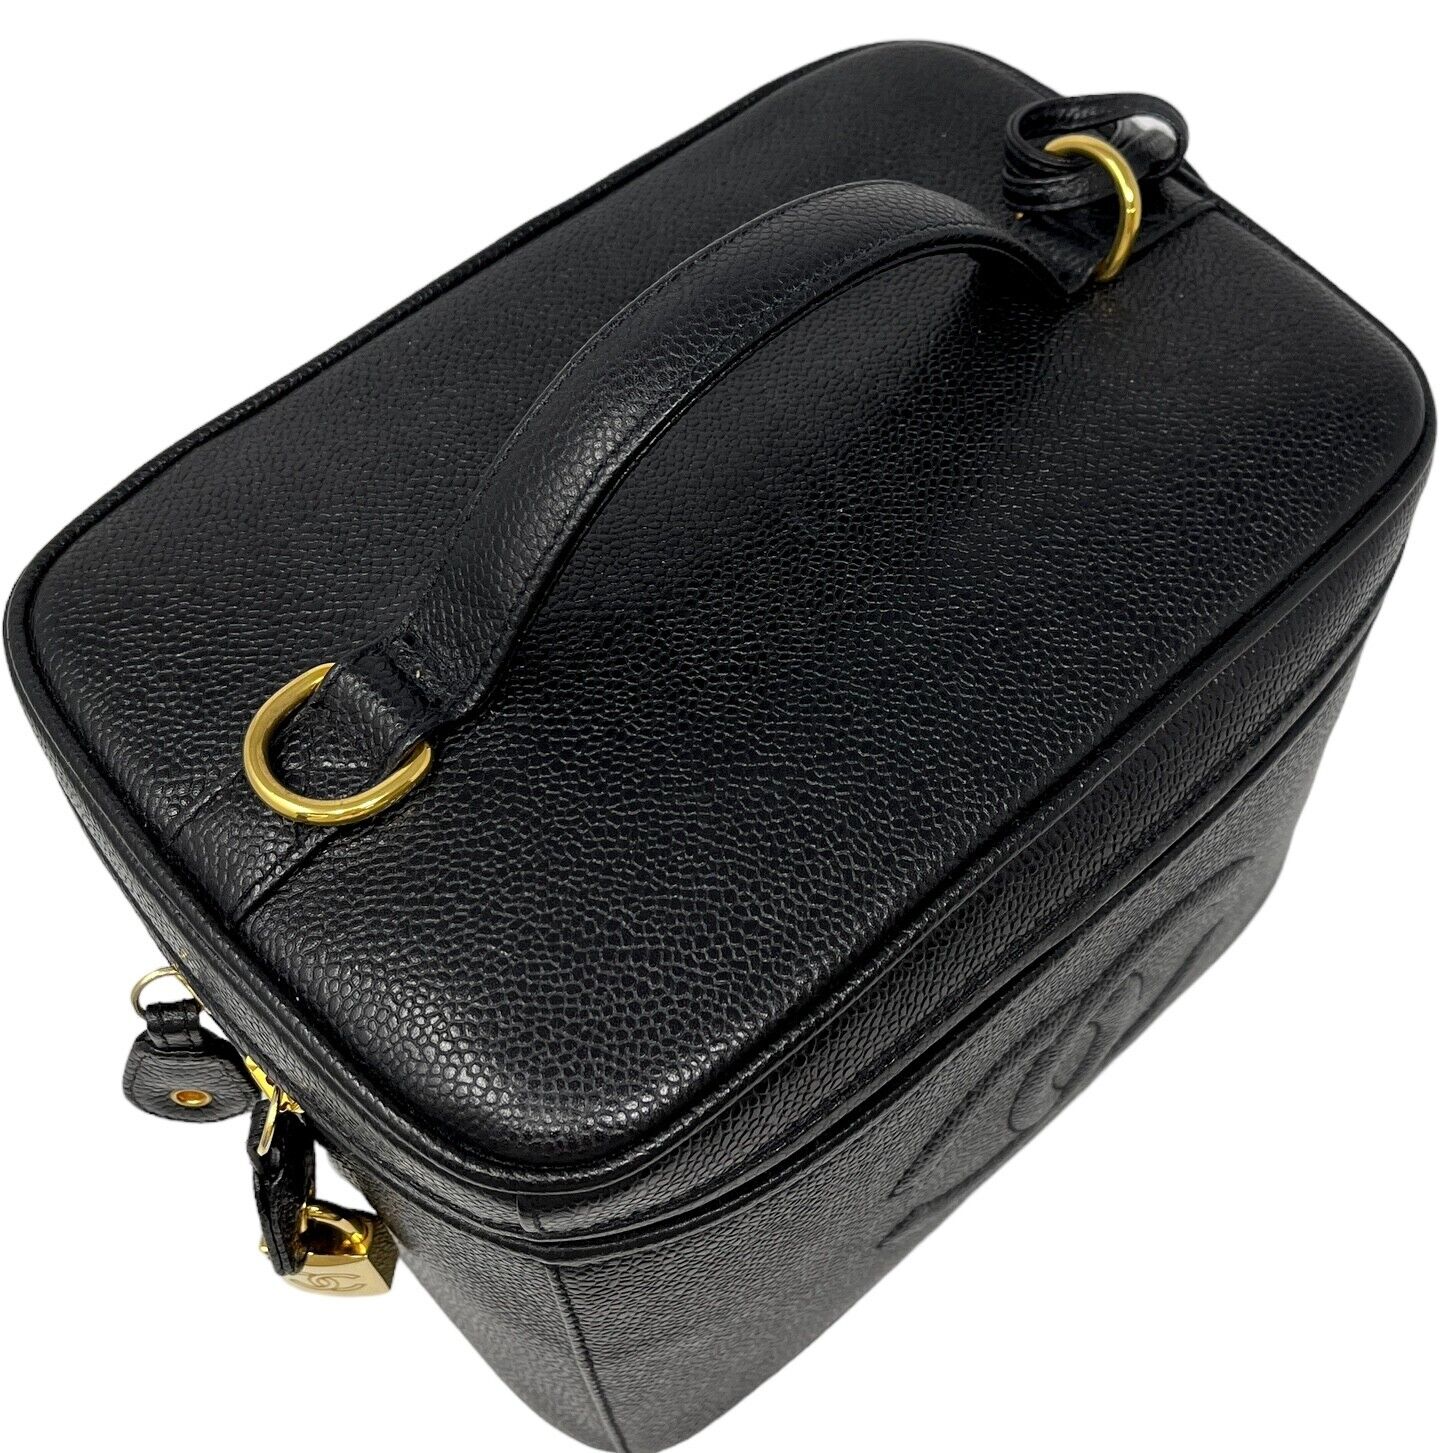 CHANEL Vintage Big CC Mark 2way Vanity Bag Padlock Black Gold Leather Rank AB+